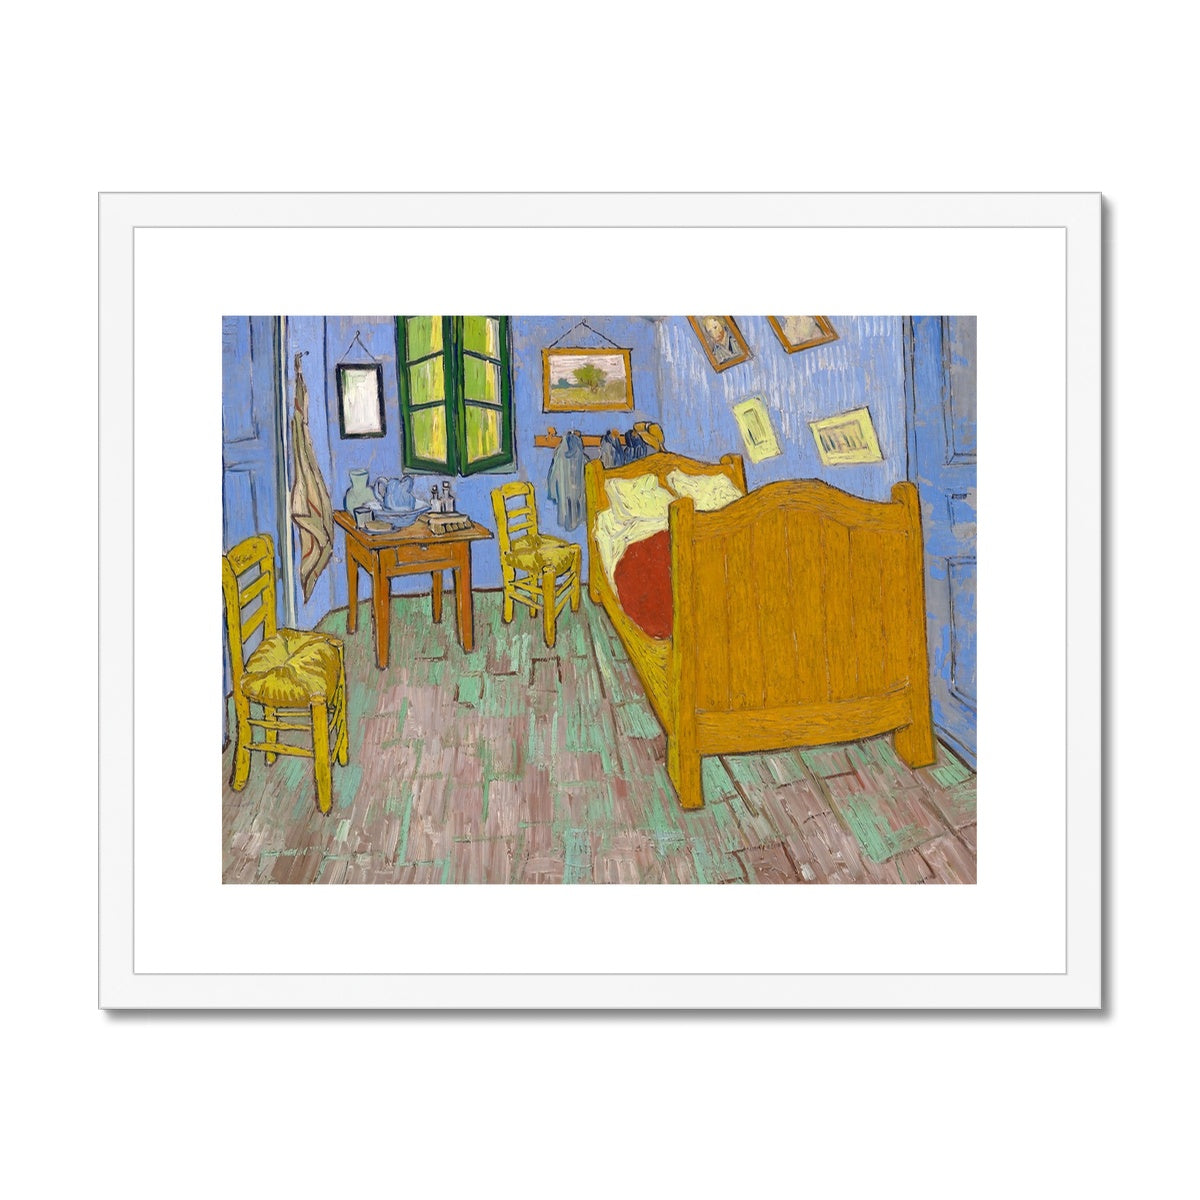 Vincent Van Gogh Framed Open Edition Art Print. 'The Bedroom'. Art Gallery Historic Art